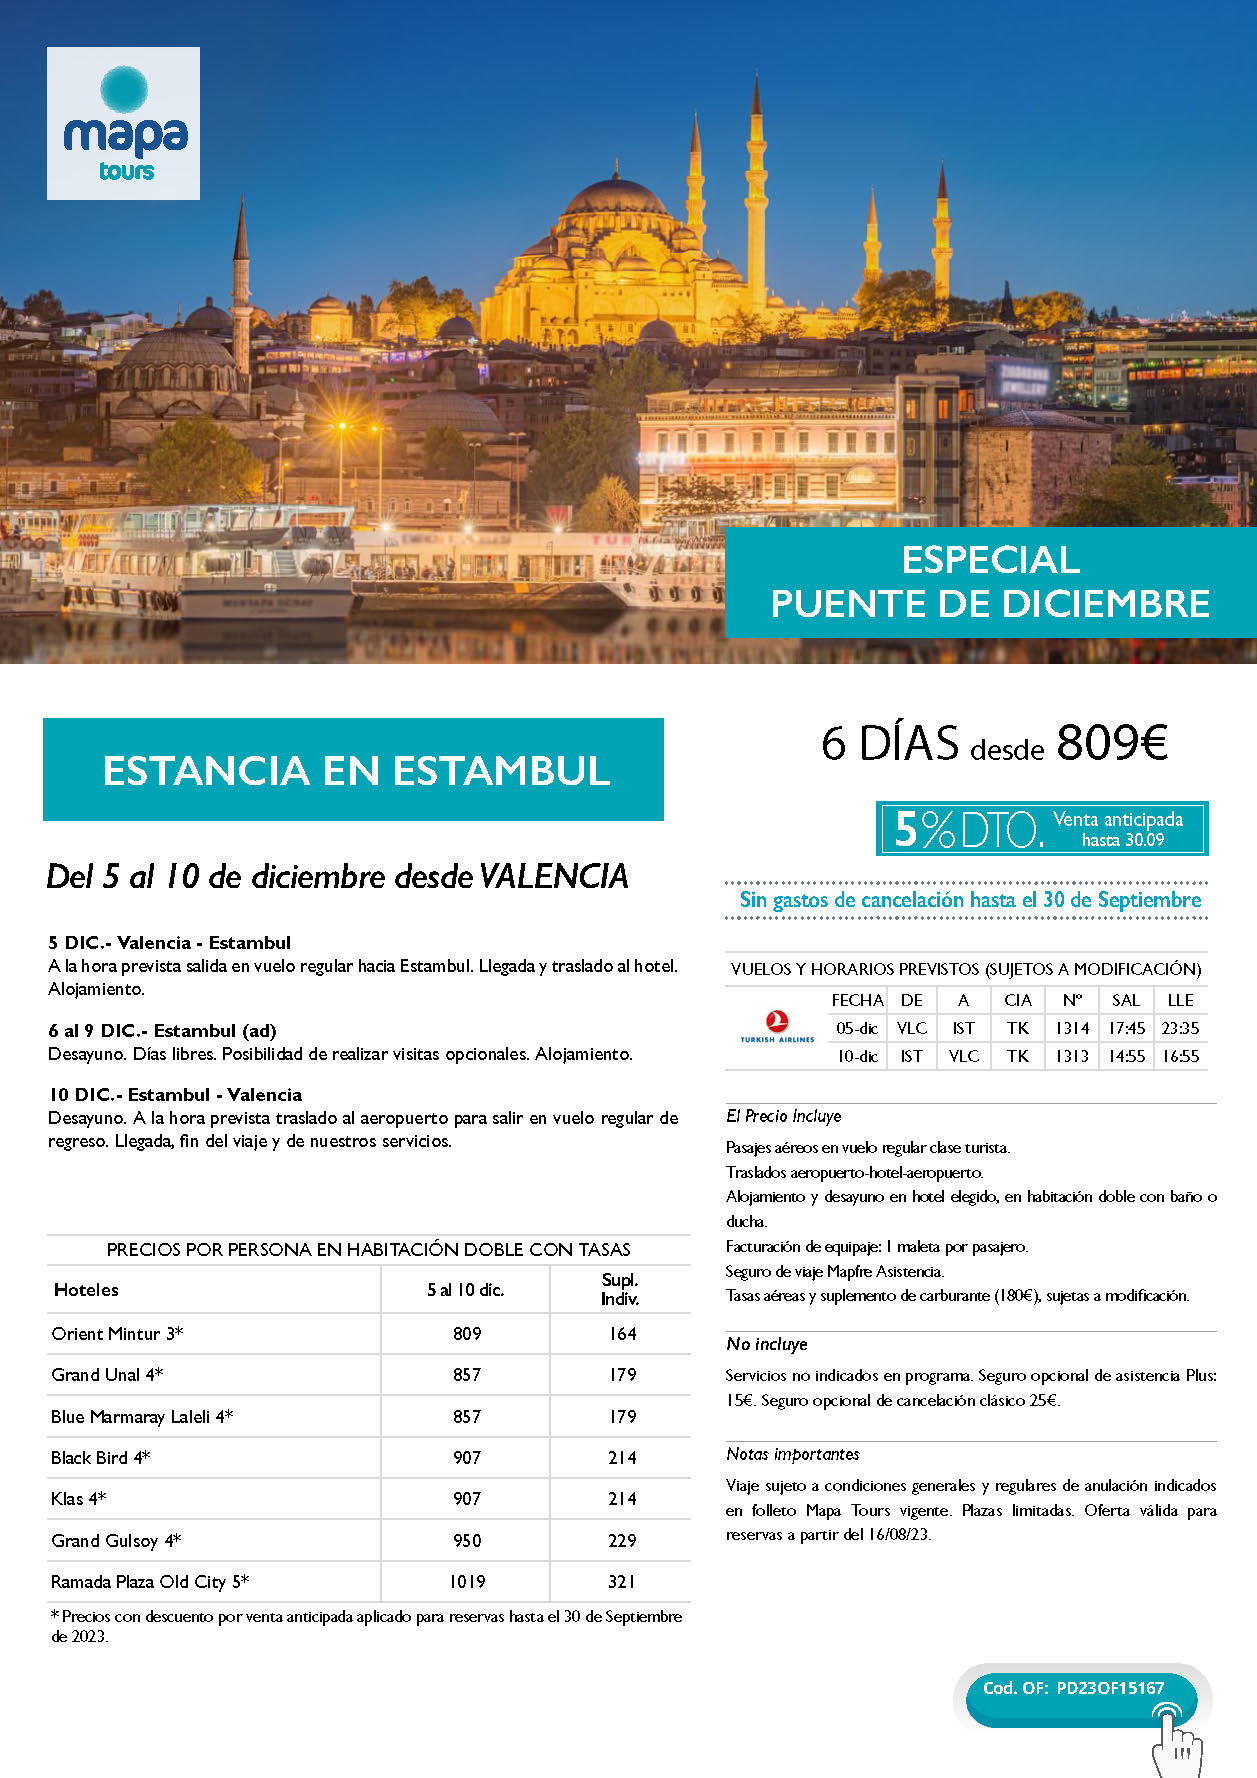 Oferta Mapa Tours Puente de Diciembre 2023 Estancia en Estambul 6 dias salida 5 diciembre en vuelo regular directo desde Valencia